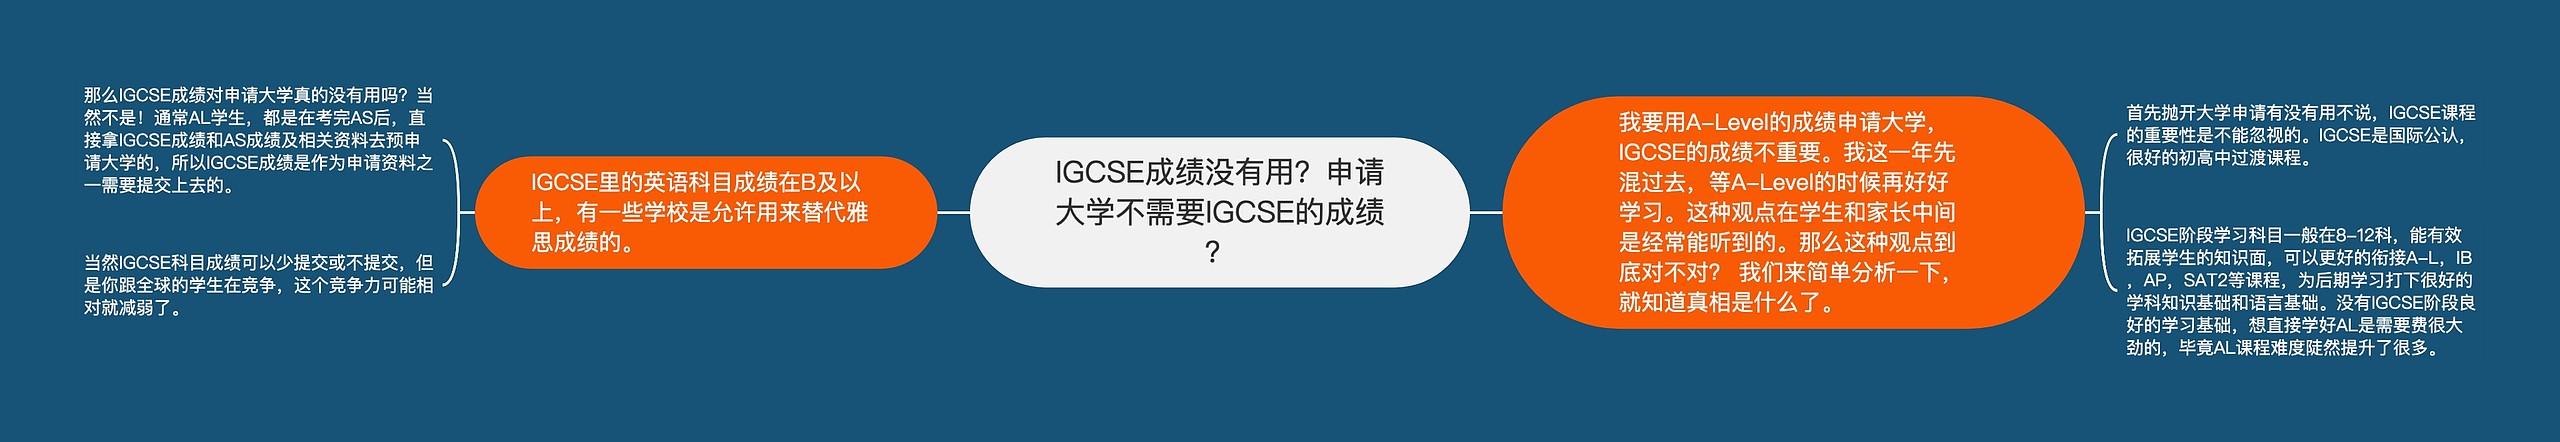 IGCSE成绩没有用？申请大学不需要IGCSE的成绩？